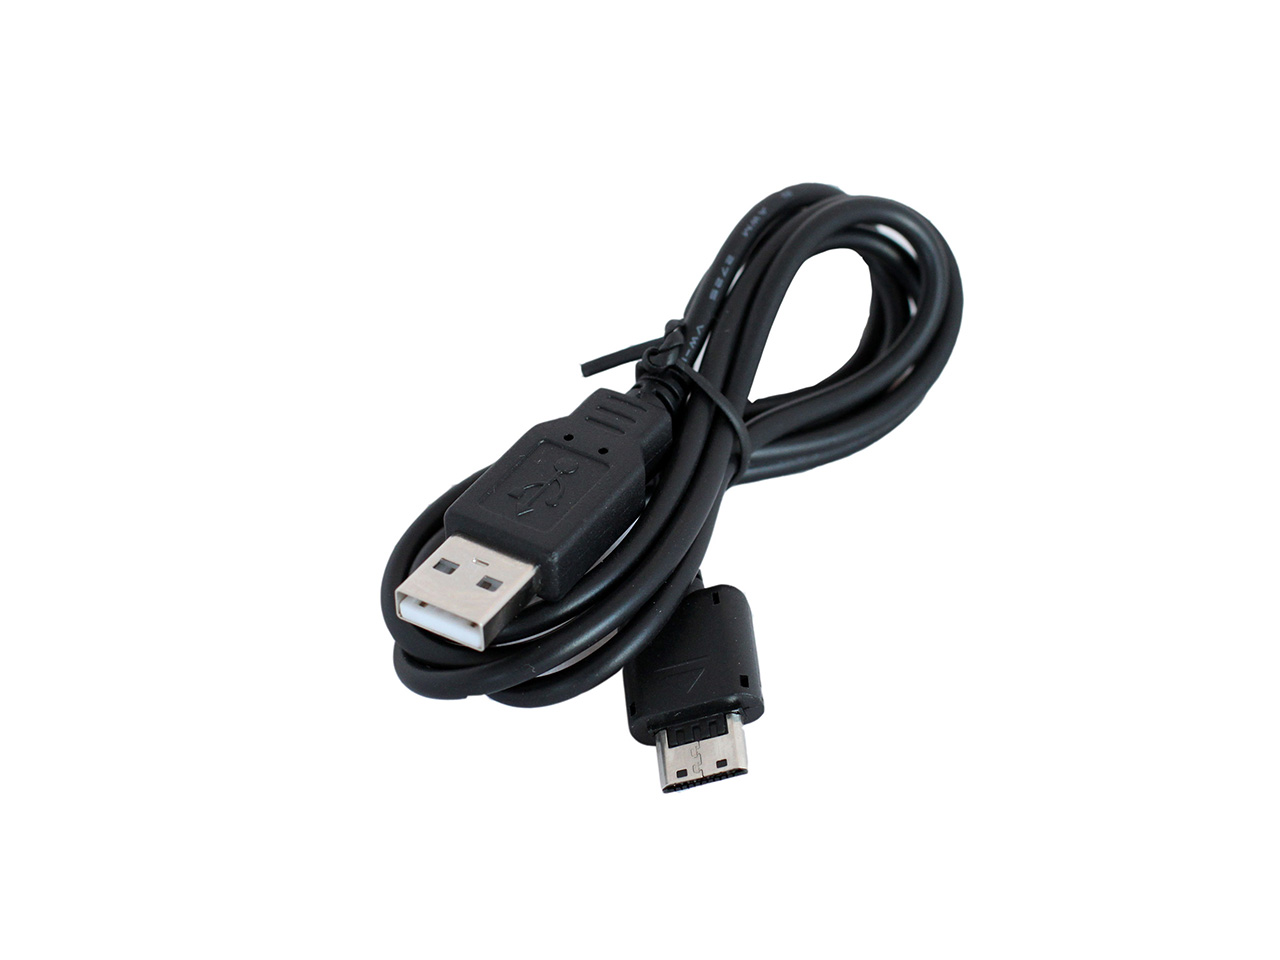 NX3-1010_20pin to USB data sync cable.jpg